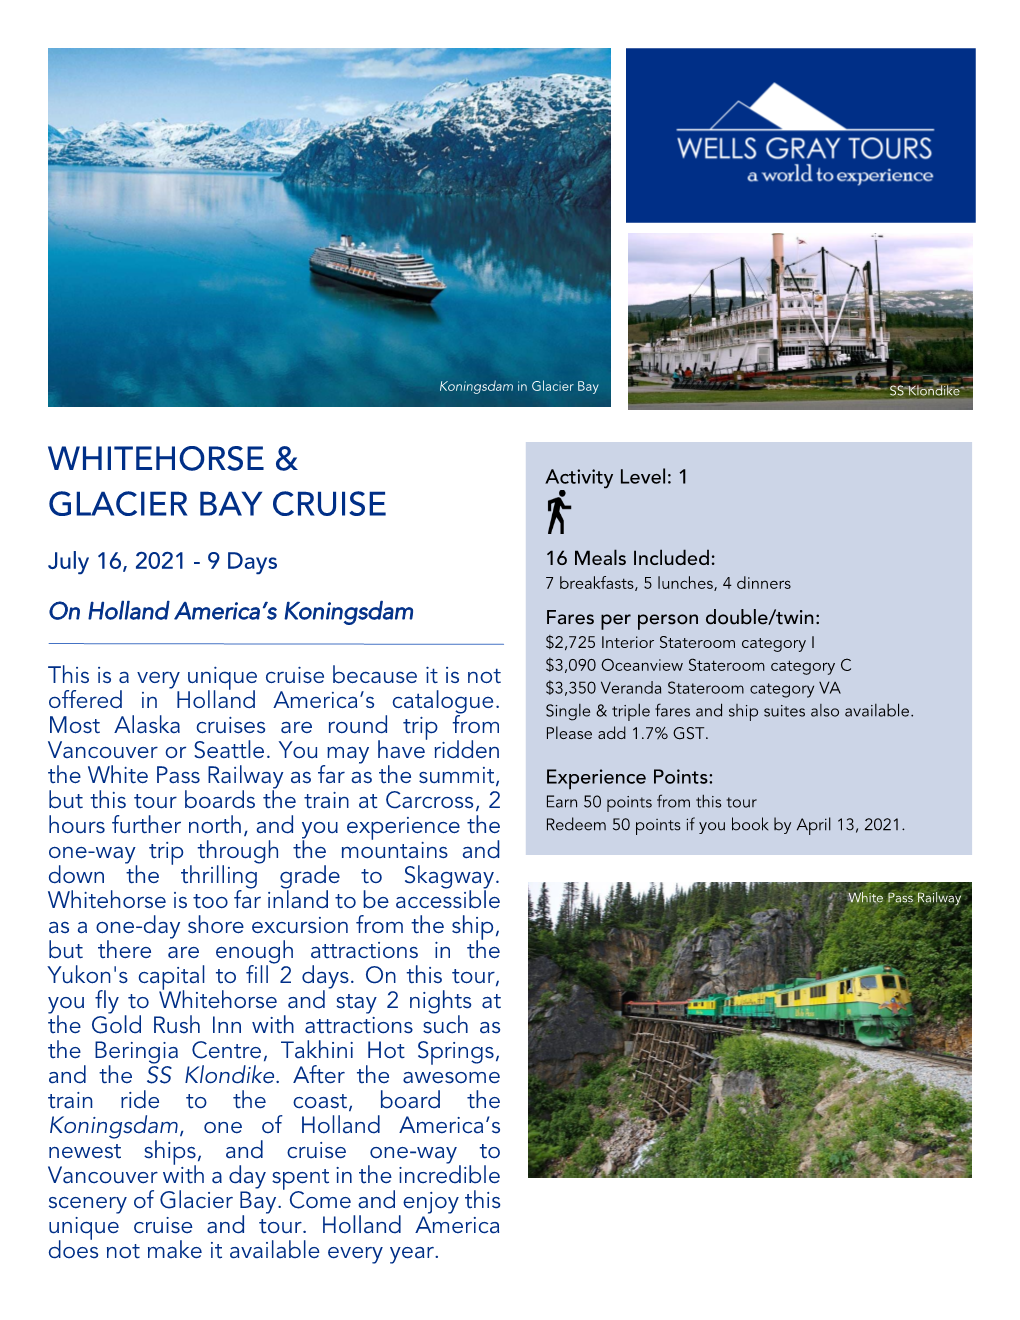 Whitehorse & Glacier Bay Cruise